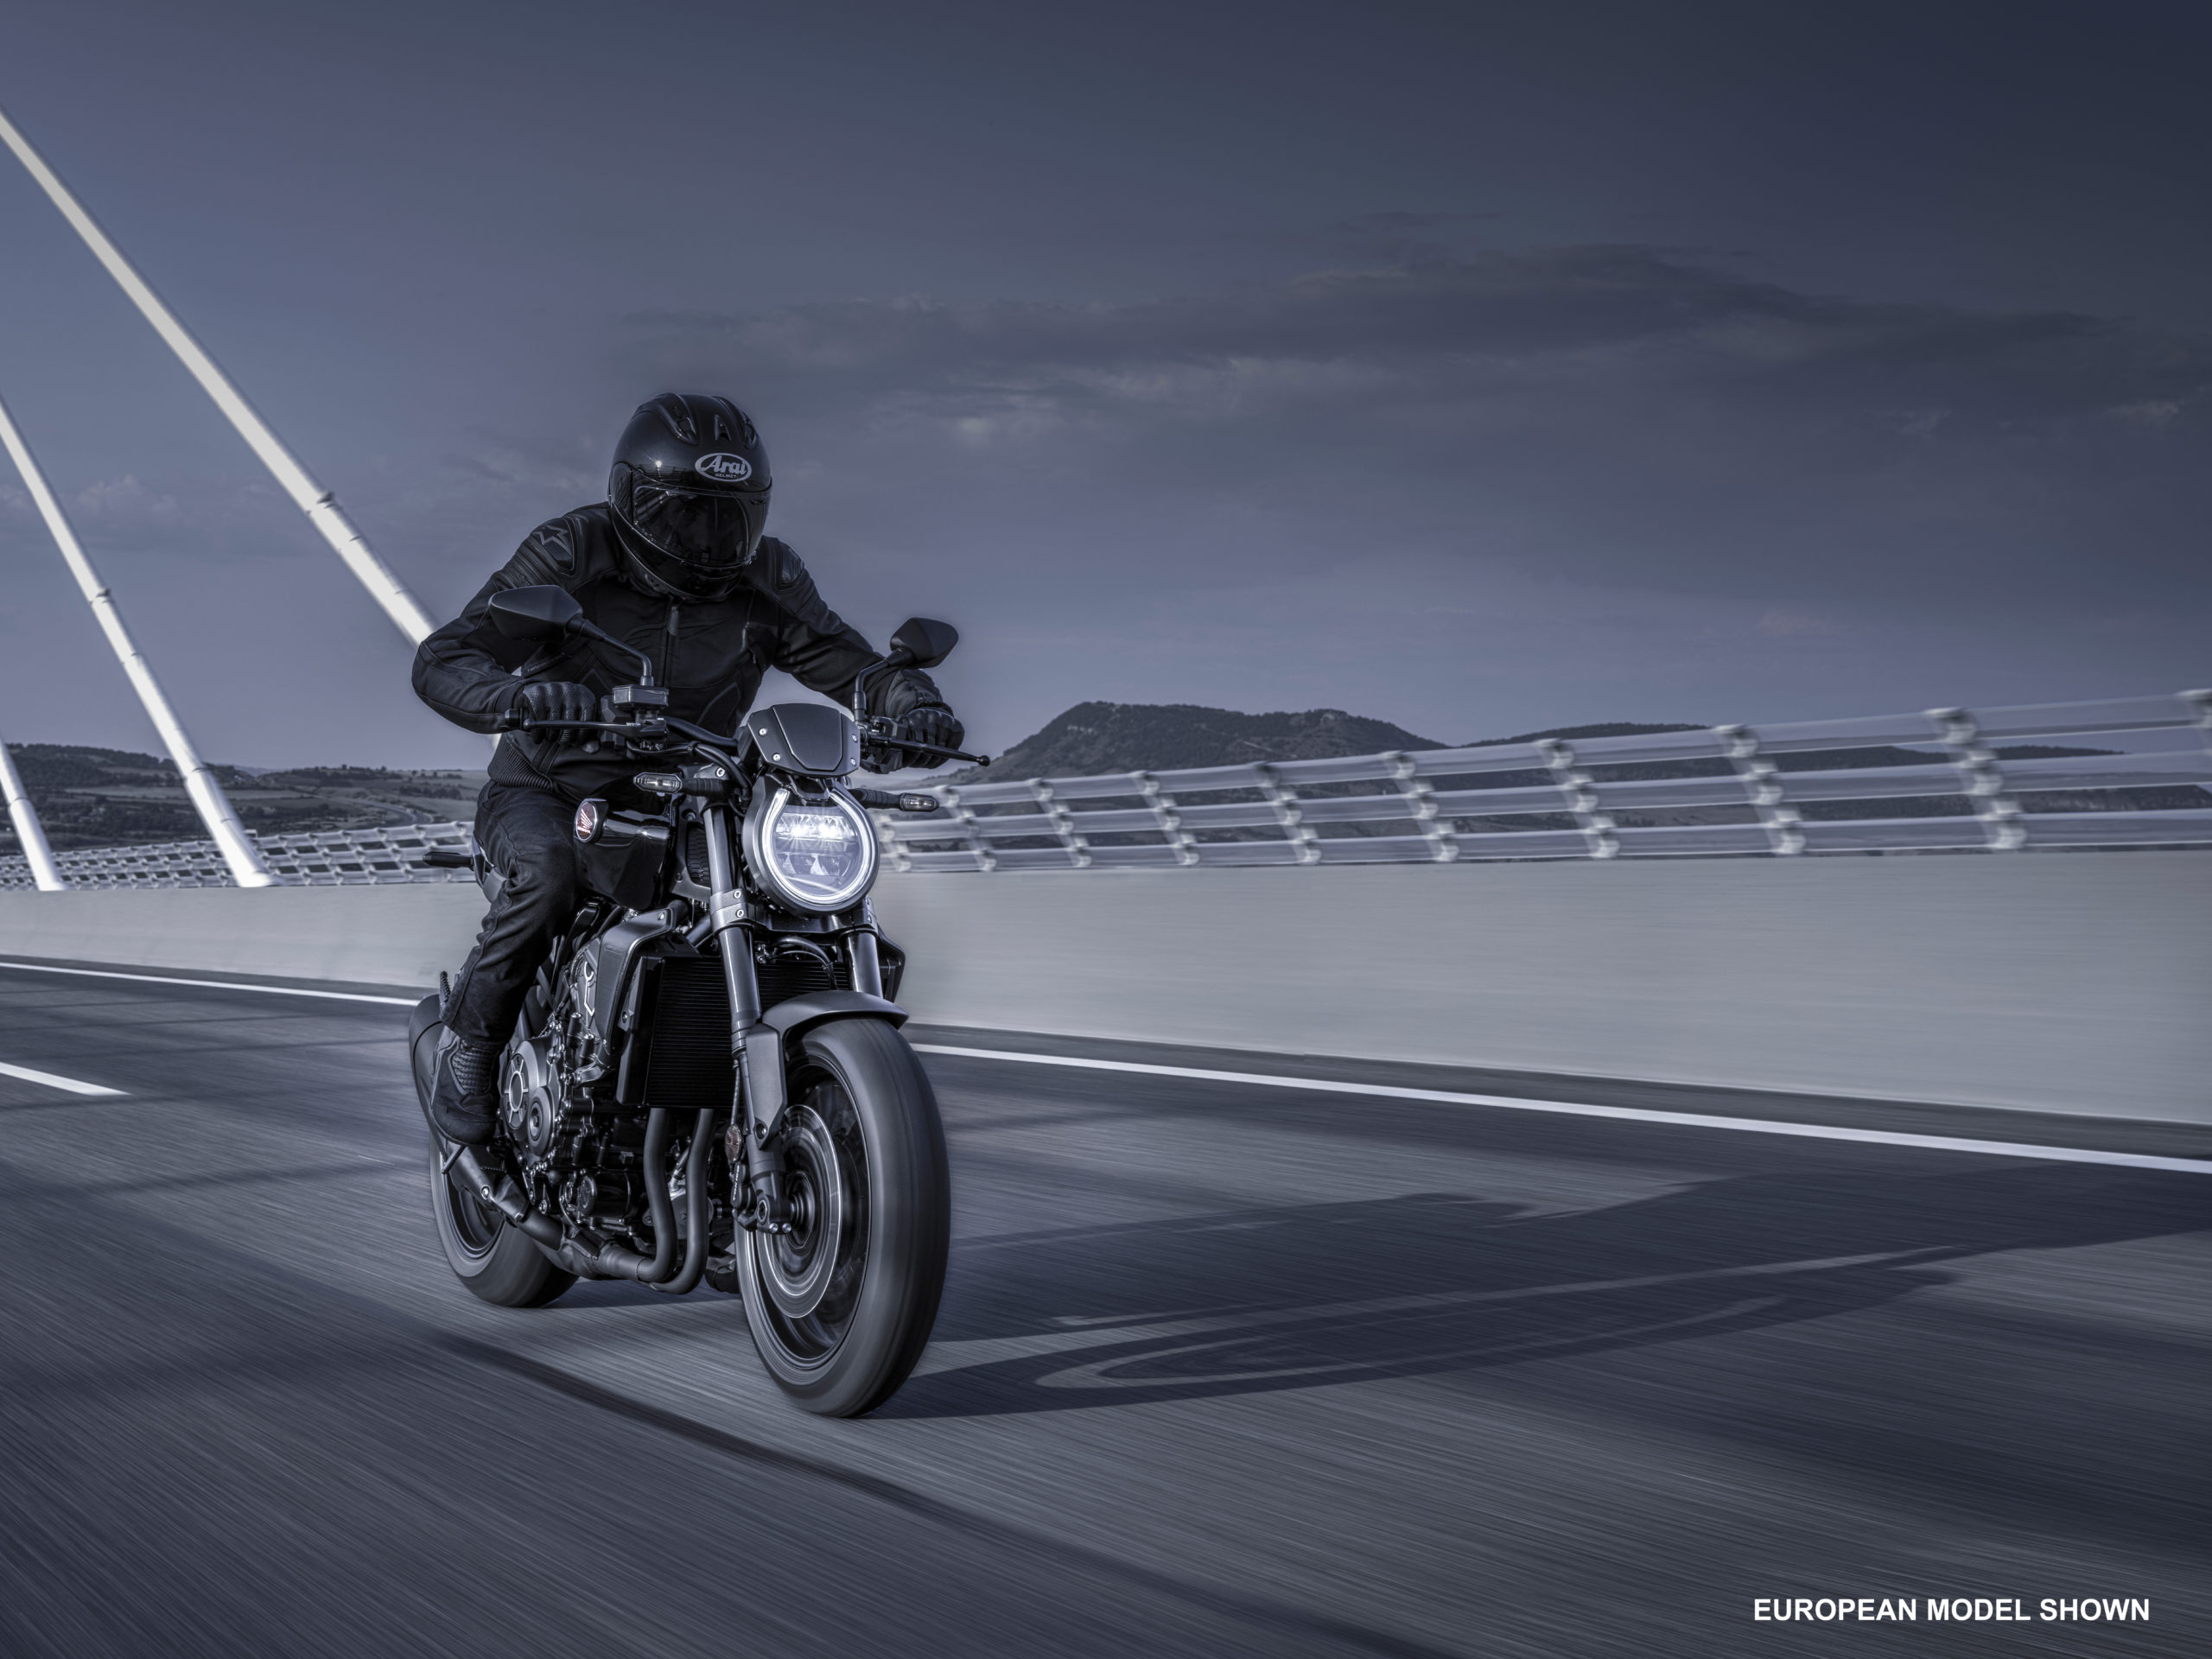 Honda CB500 Twin Super Sport Motorcycles - webBikeWorld